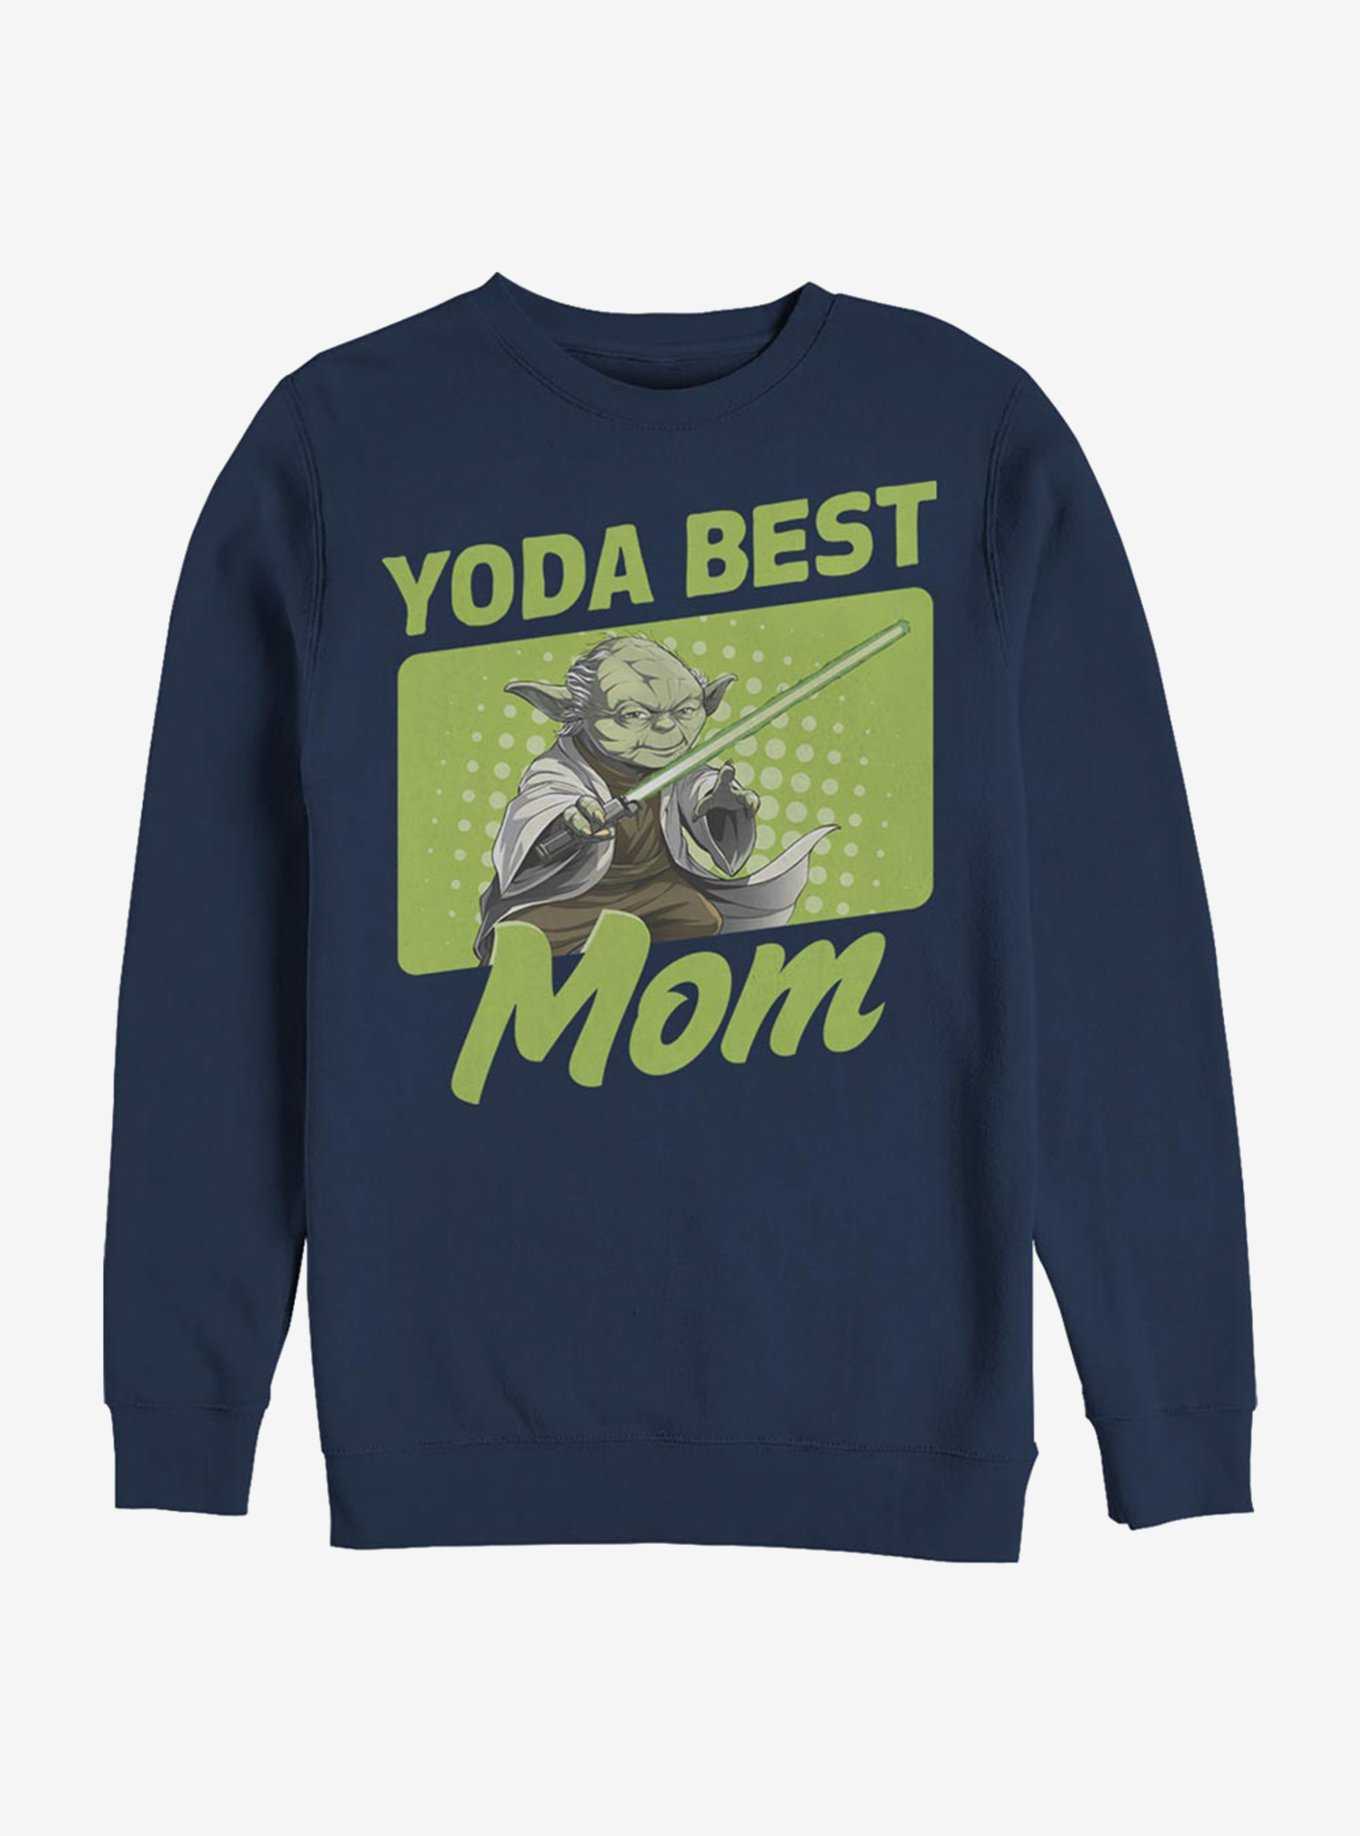 Star Wars Yoda Best Mom Sweatshirt, , hi-res